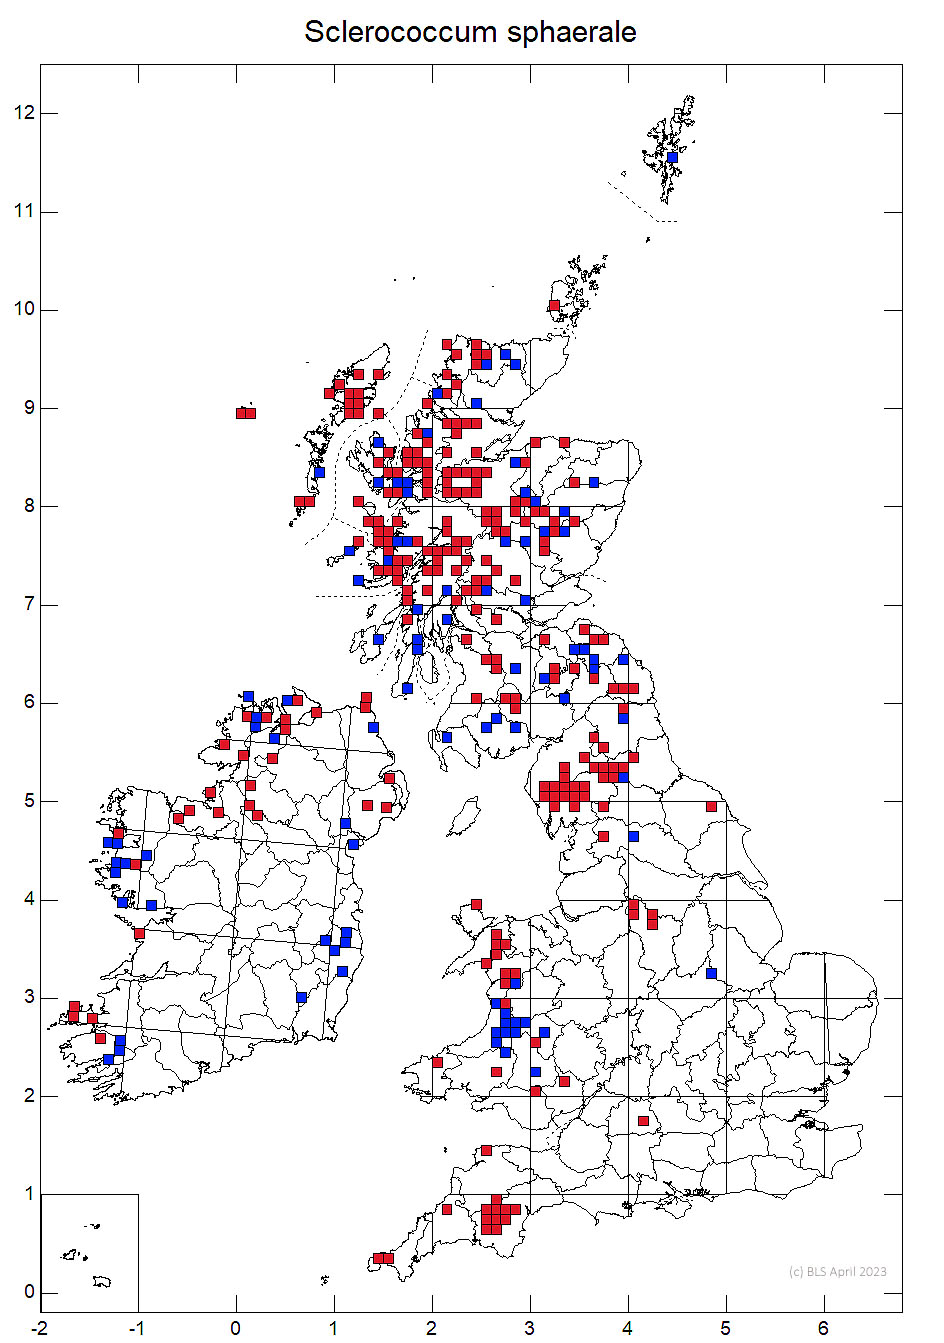 Sclerococcum sphaerale 10km sq distribution map